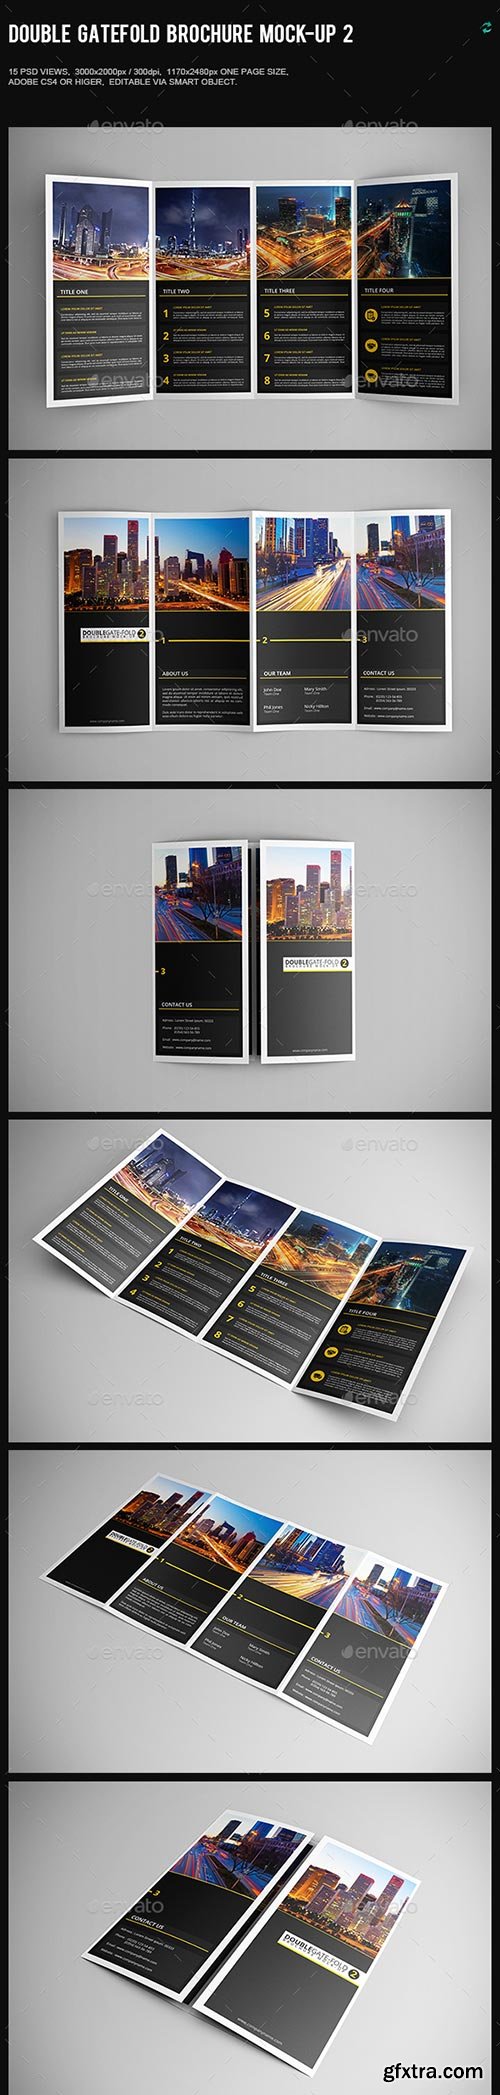 Graphicriver - Double Gatefold Brochure Mock-Up 2 10159444